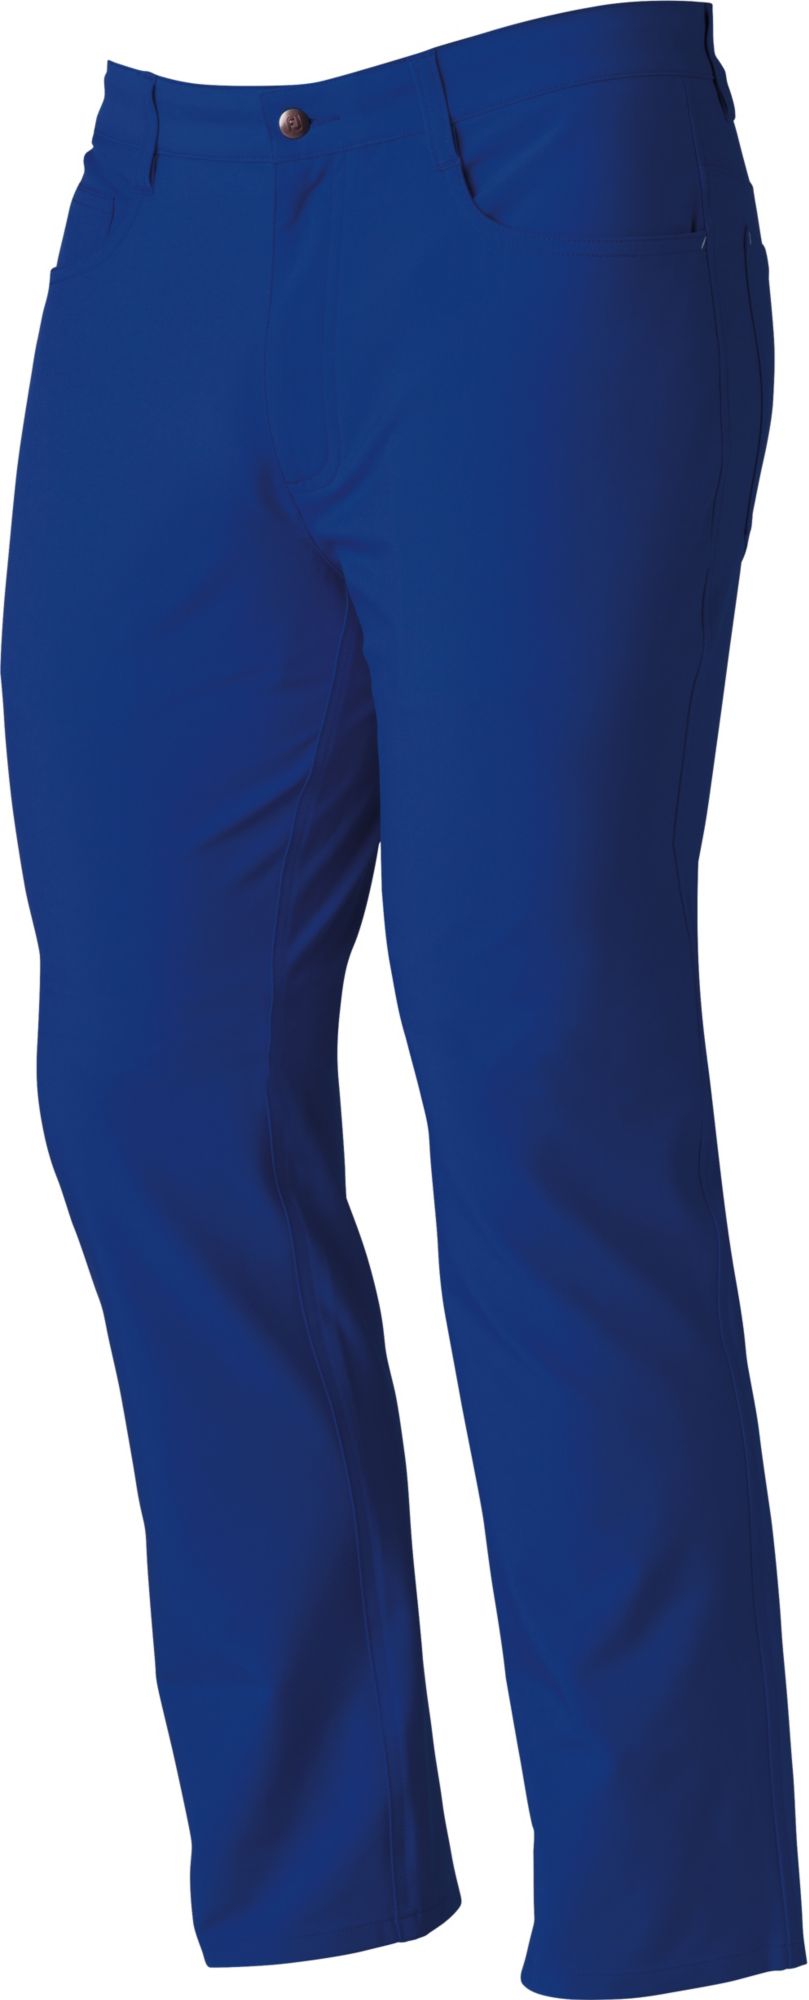 Men's Golf Pants | DICK'S Sporting Goods